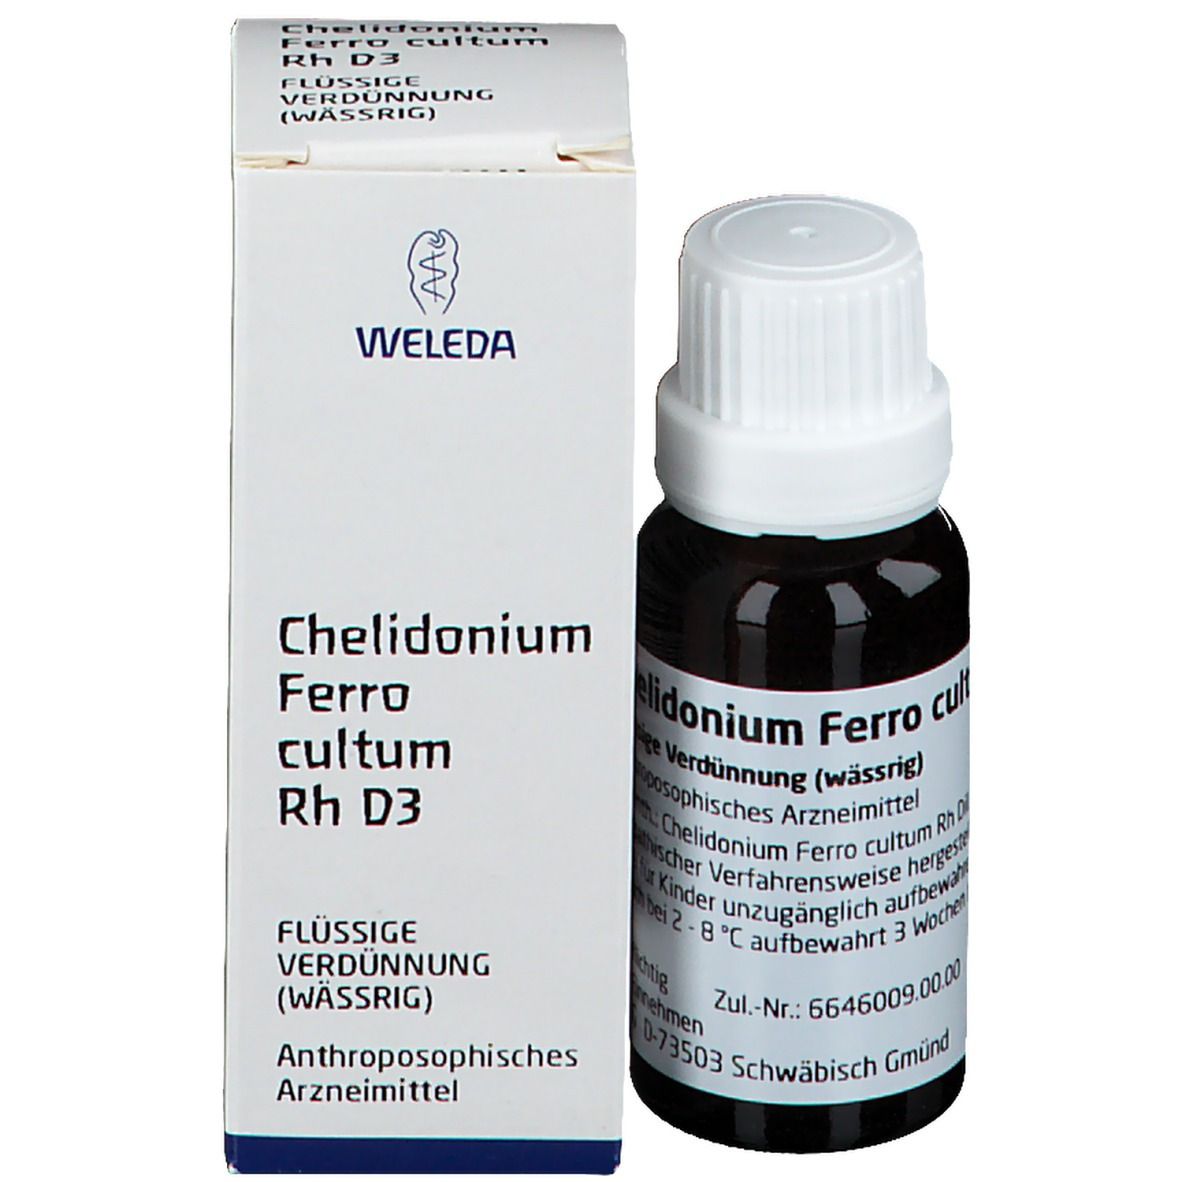 Chelidonium Ferro Cultum Rh D3